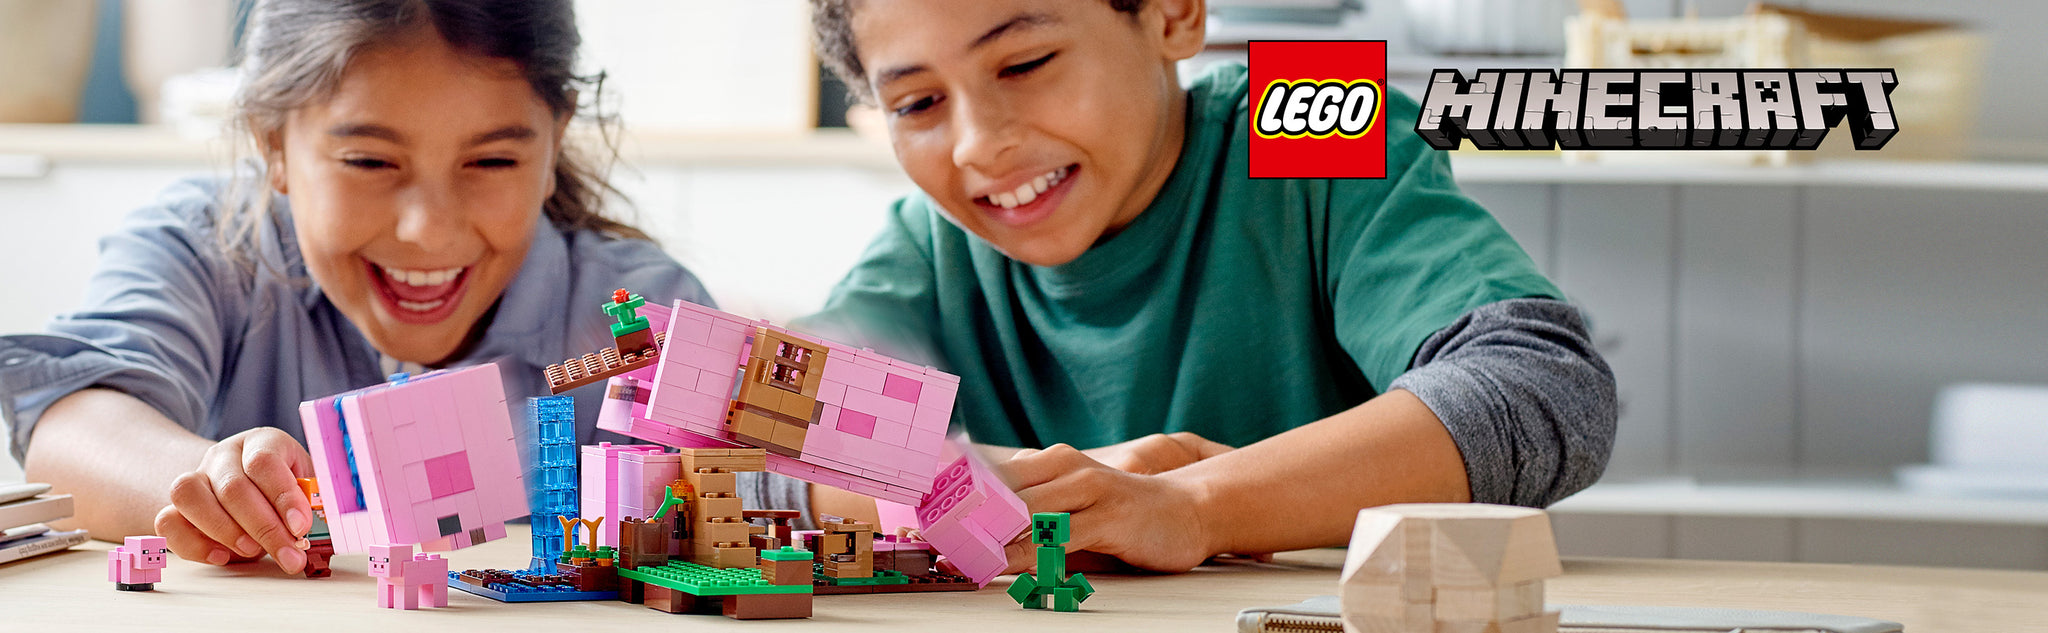 LEGO 21170 The Pig House